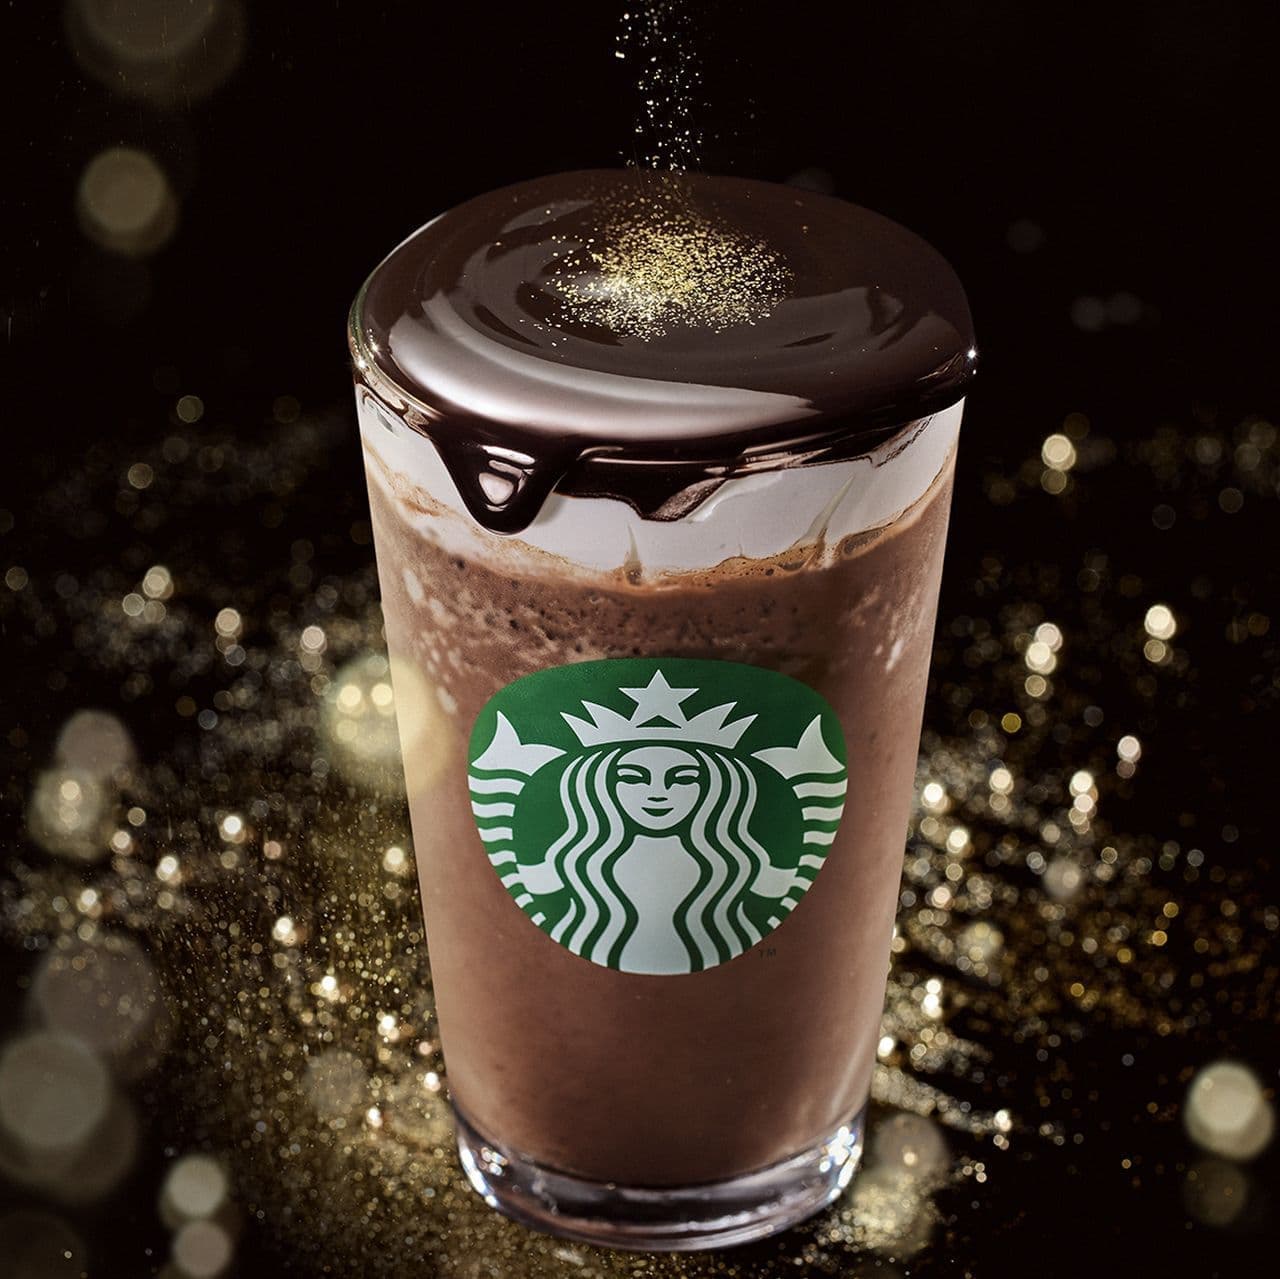 Starbucks Valentine's Day Beverage #2: Opera Frappuccino